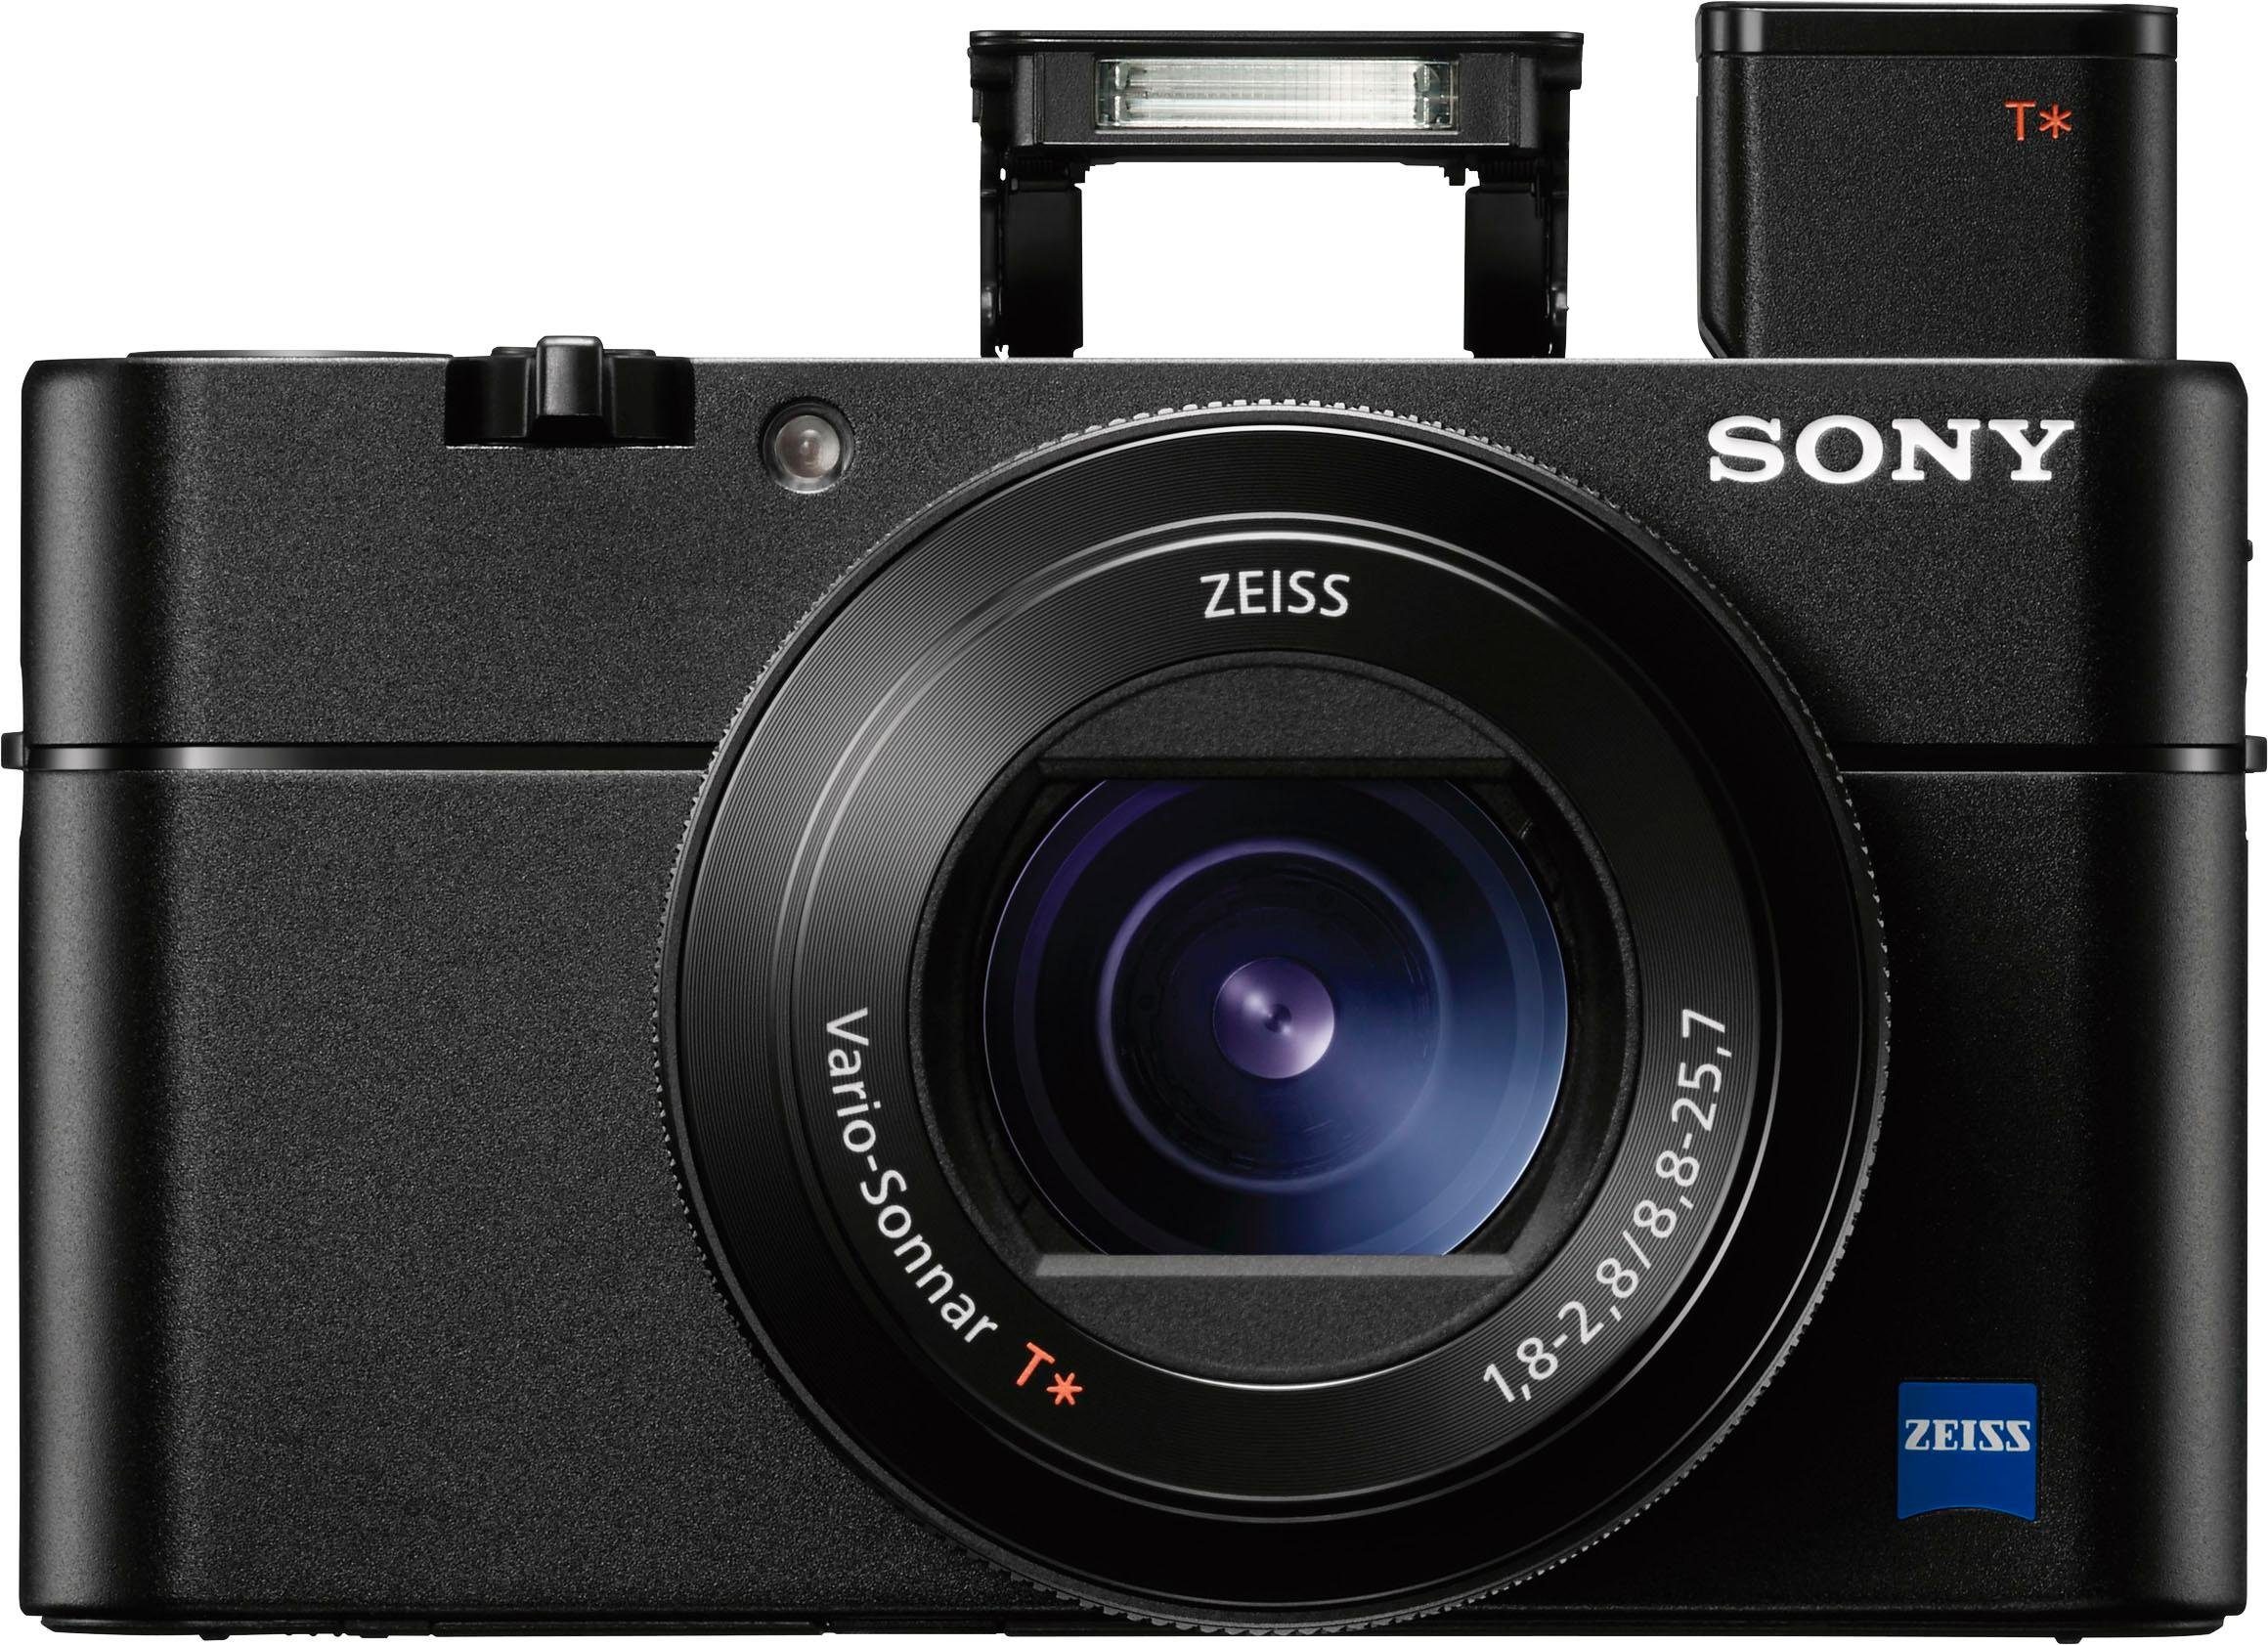 Sony Cybershot DSC-RX100 V(A) compact camera